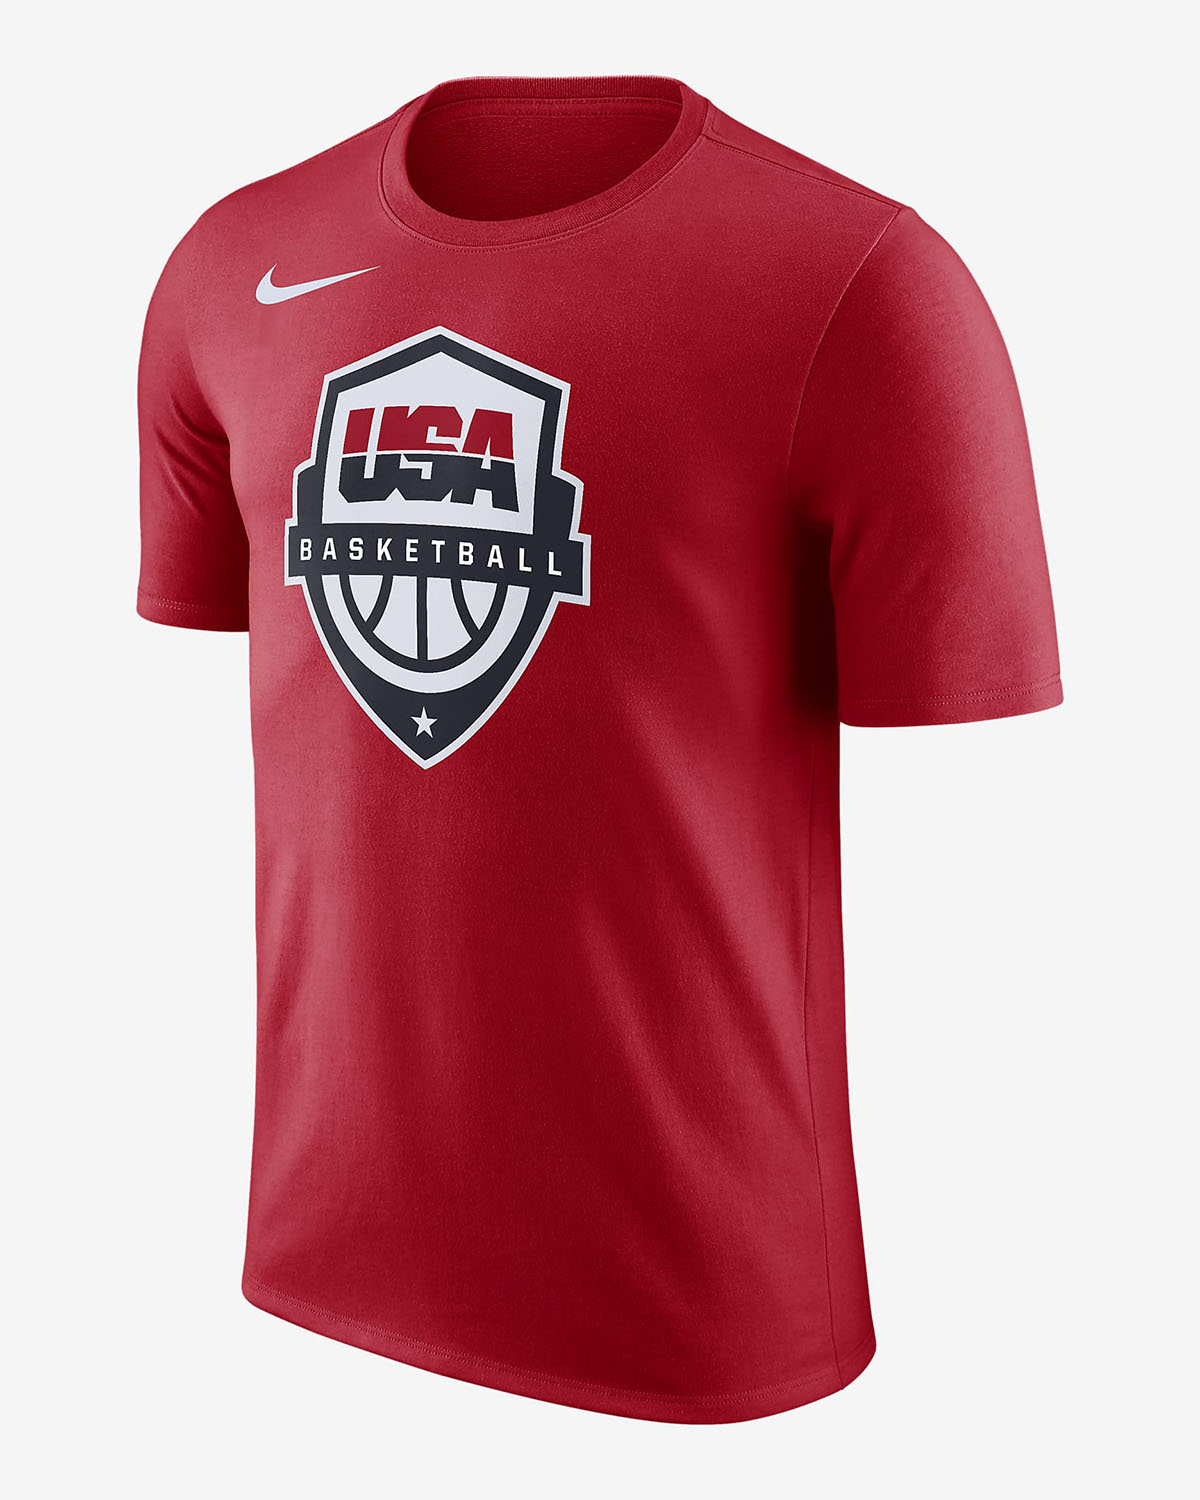 Nike USA Basketball T Shirt Sport Red